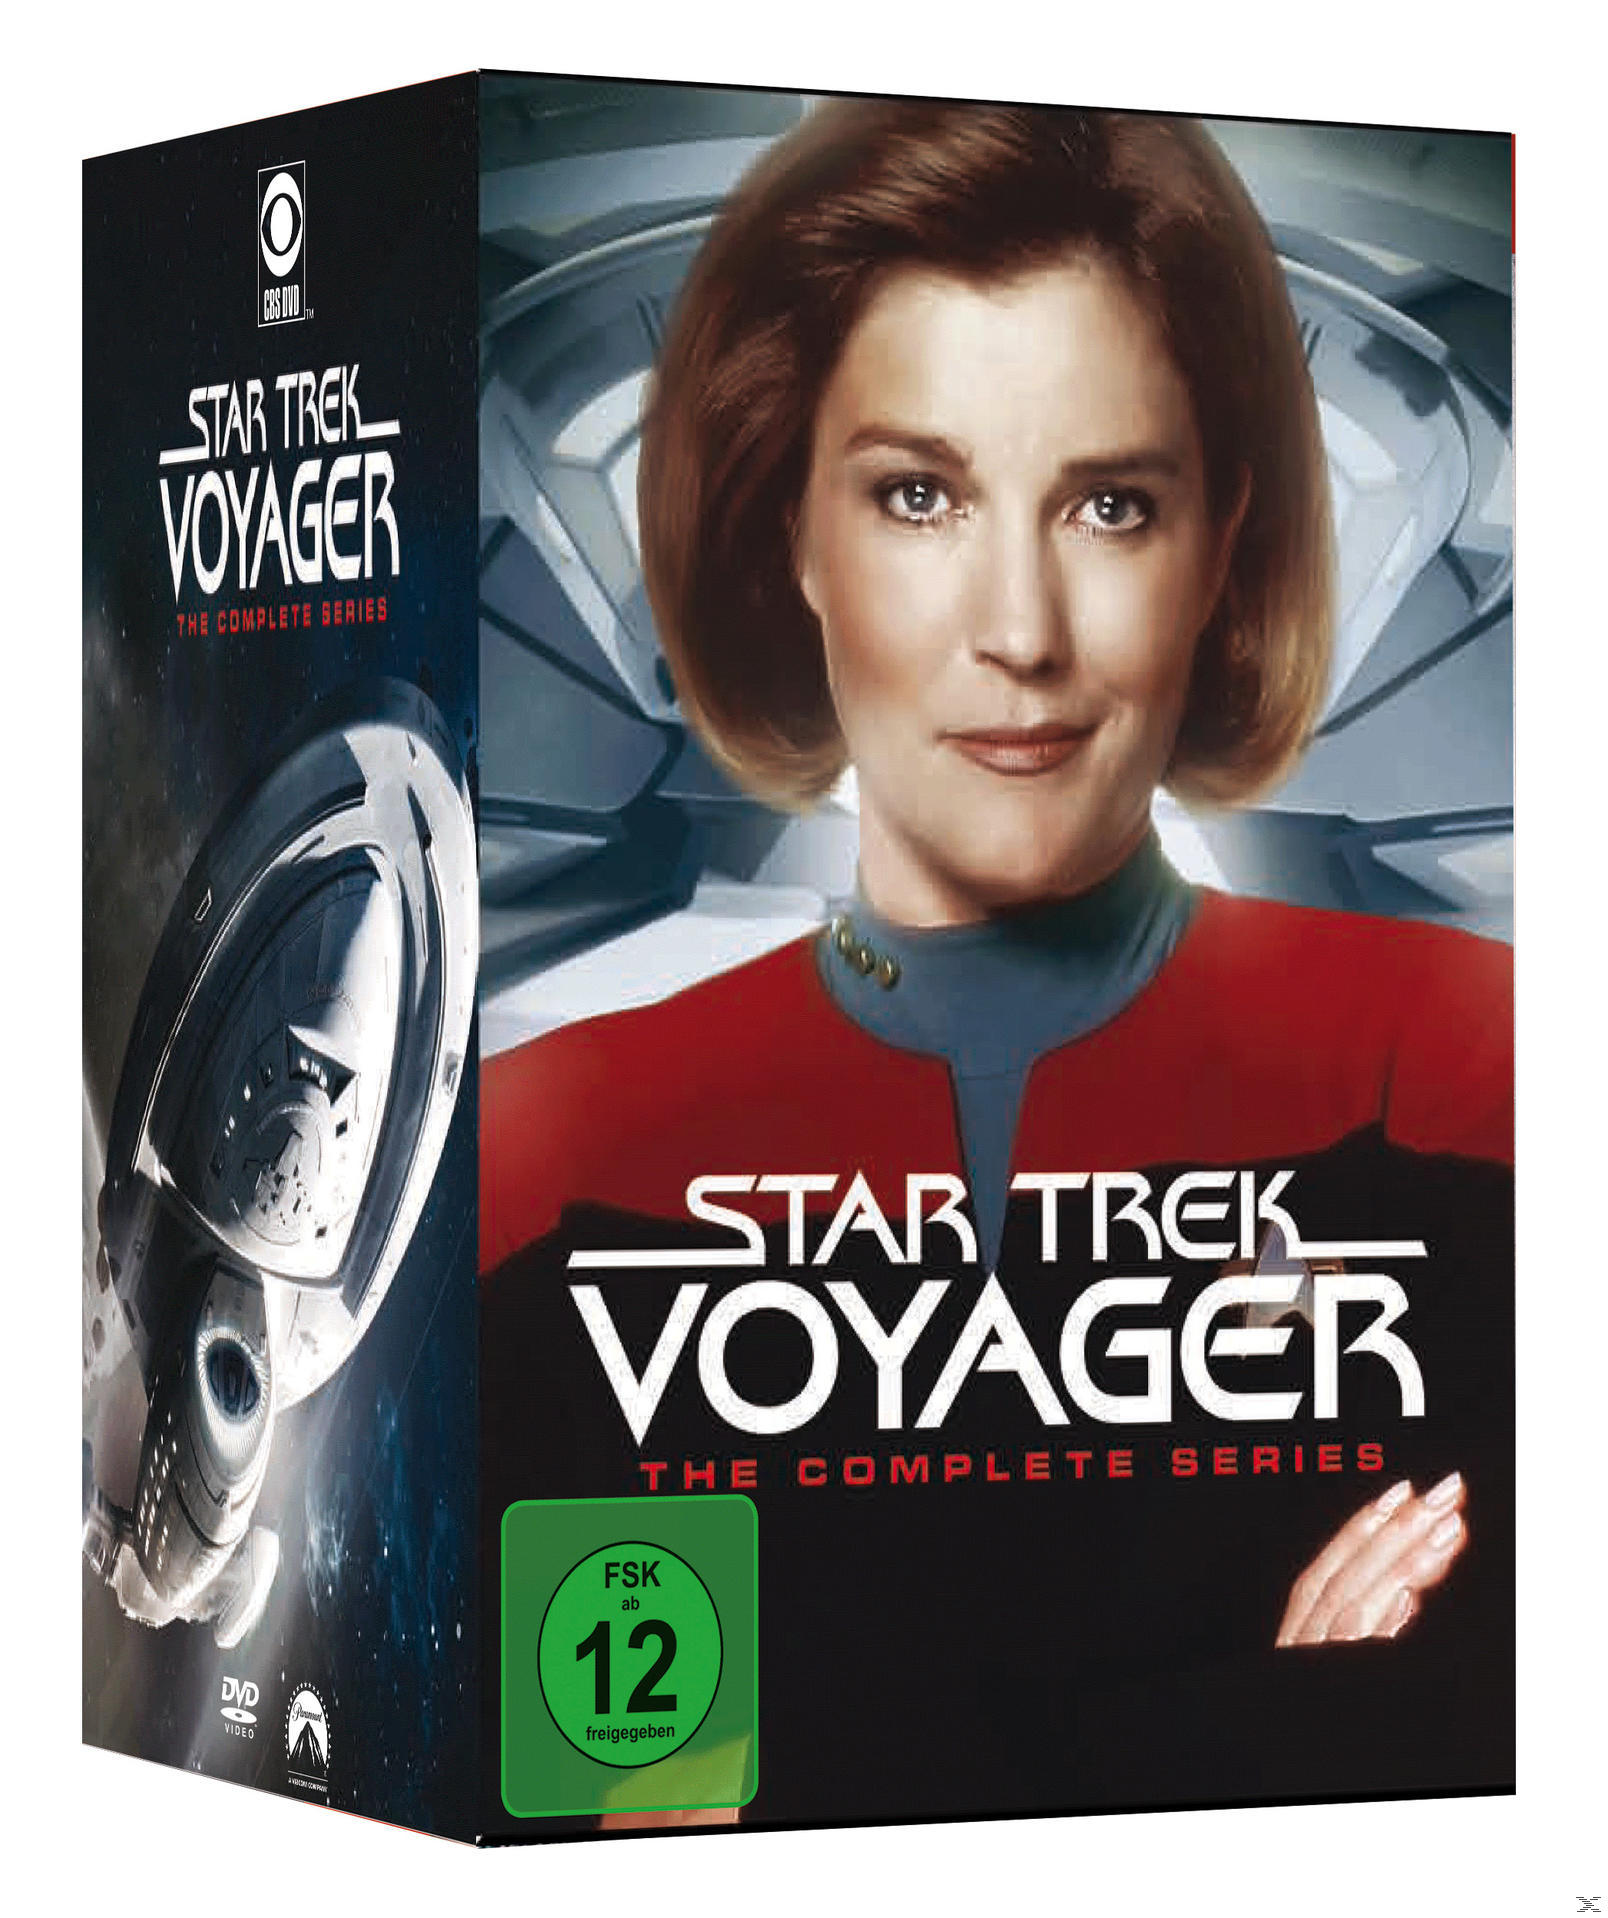 STAR TREK: Voyager Boxset - Complete DVD